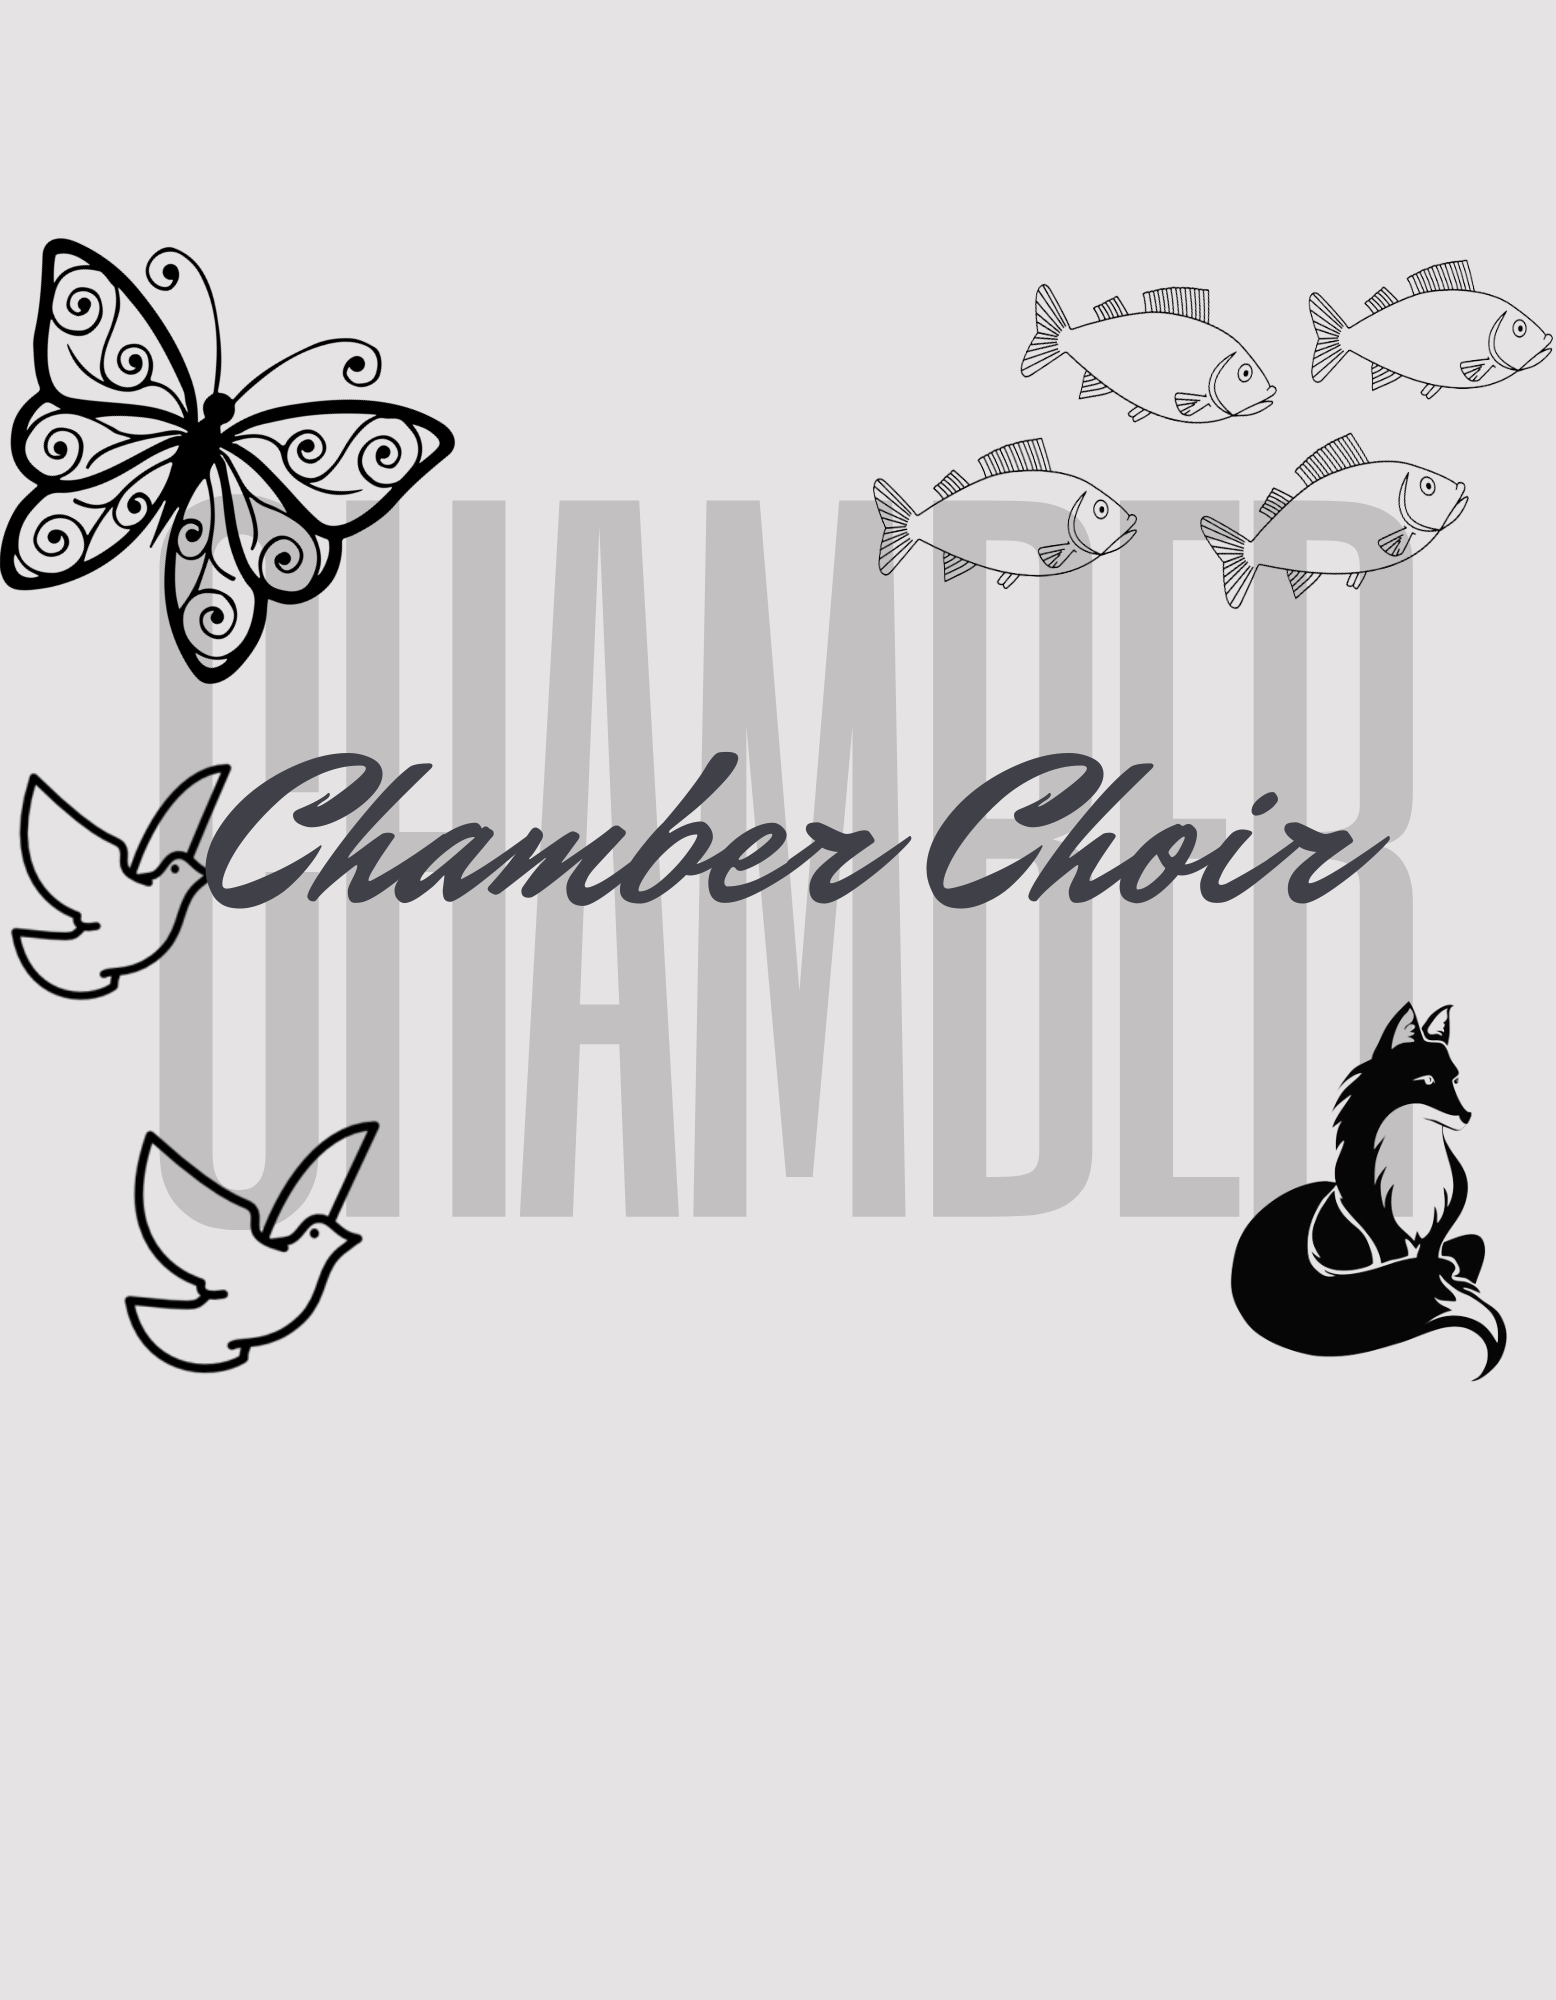 Chamber Choir logo.png